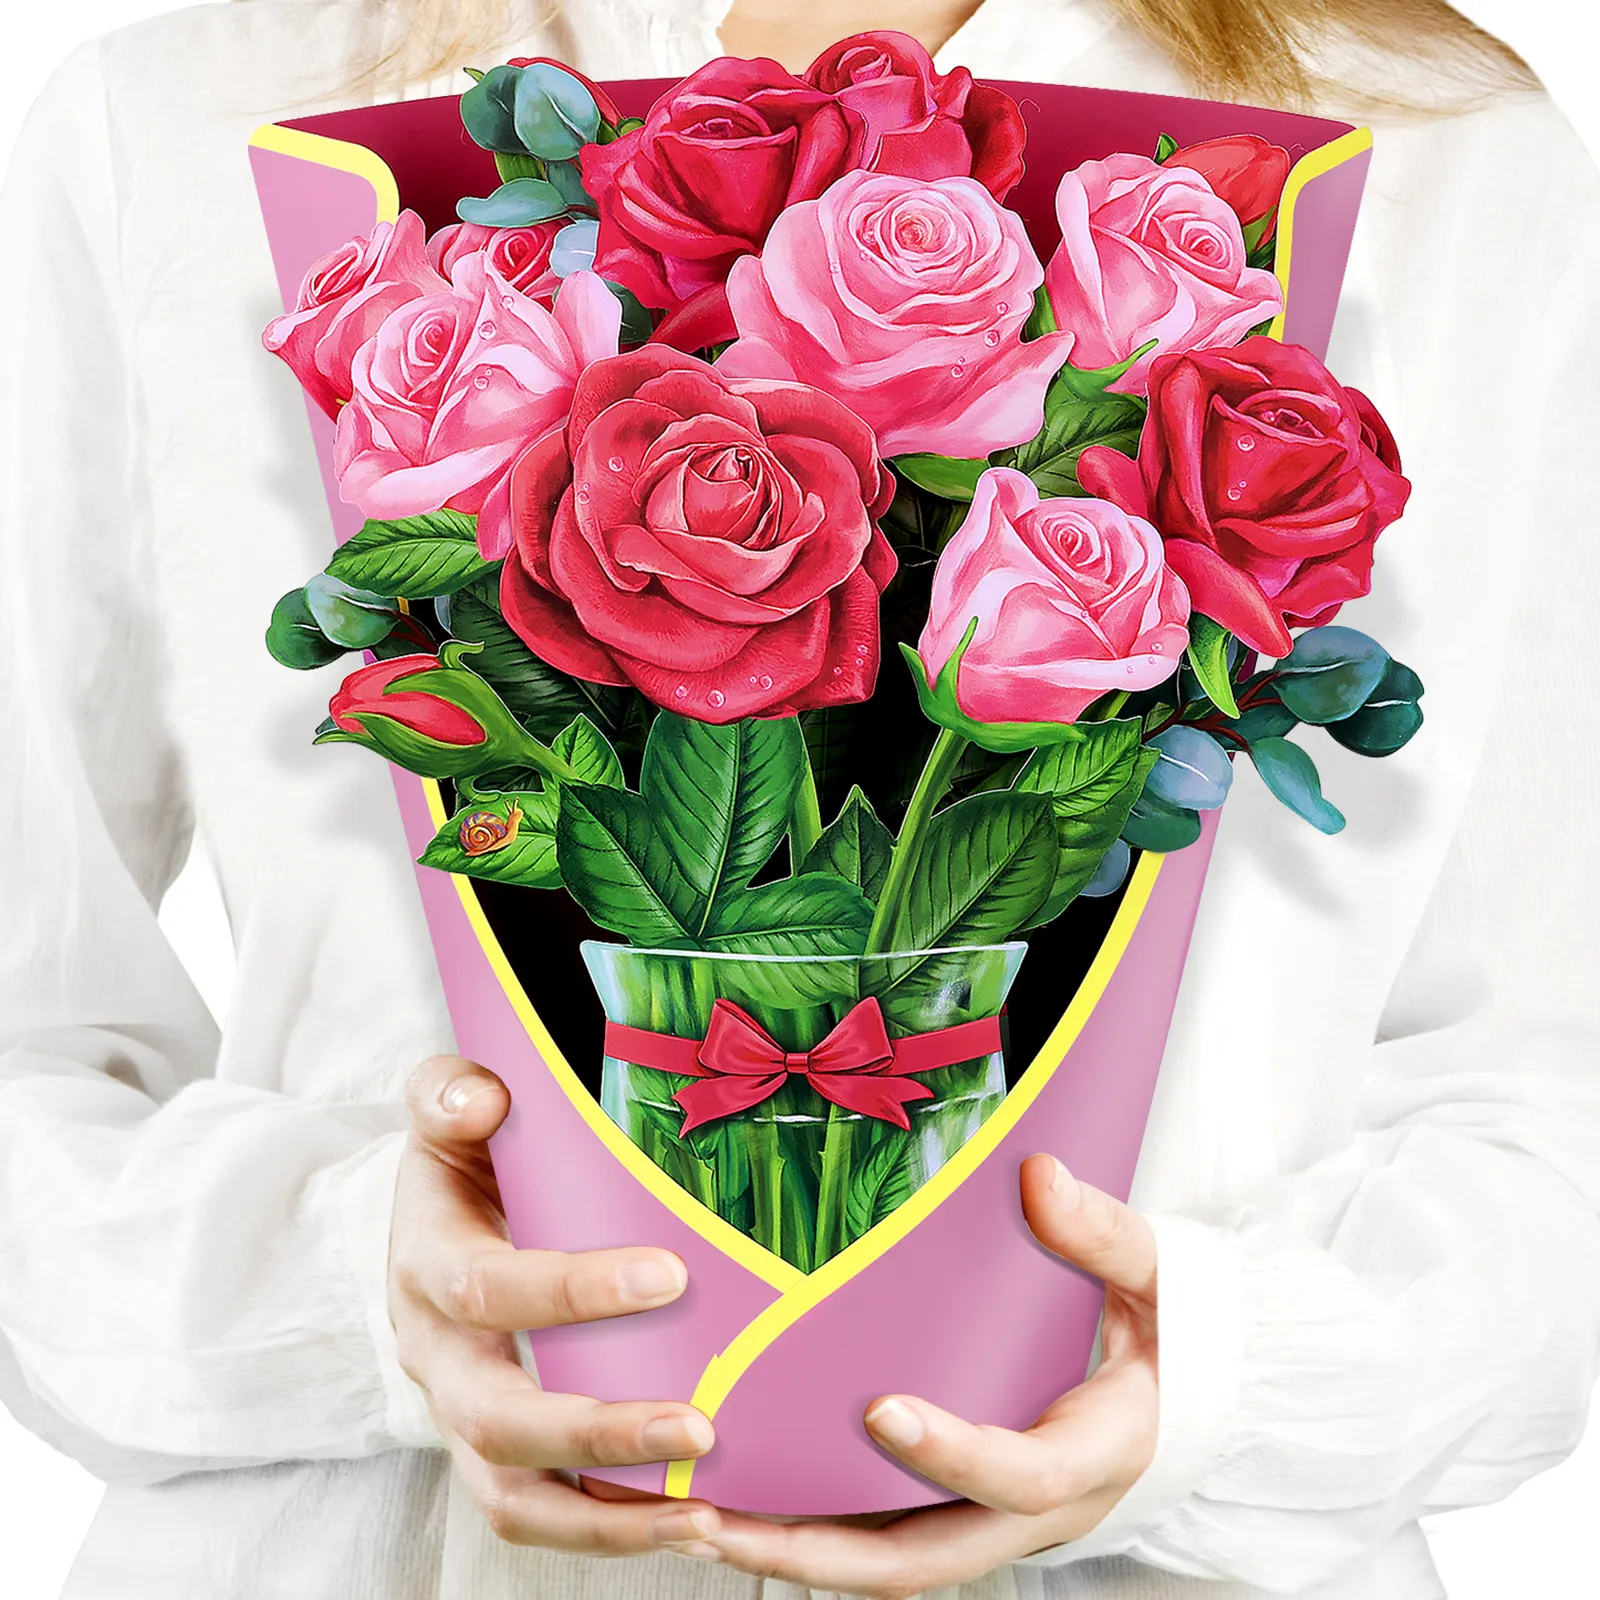 Biglietto di auguri per regali creativi di san valentino di alta qualità con carta Pop-Up Bouquet di fiori